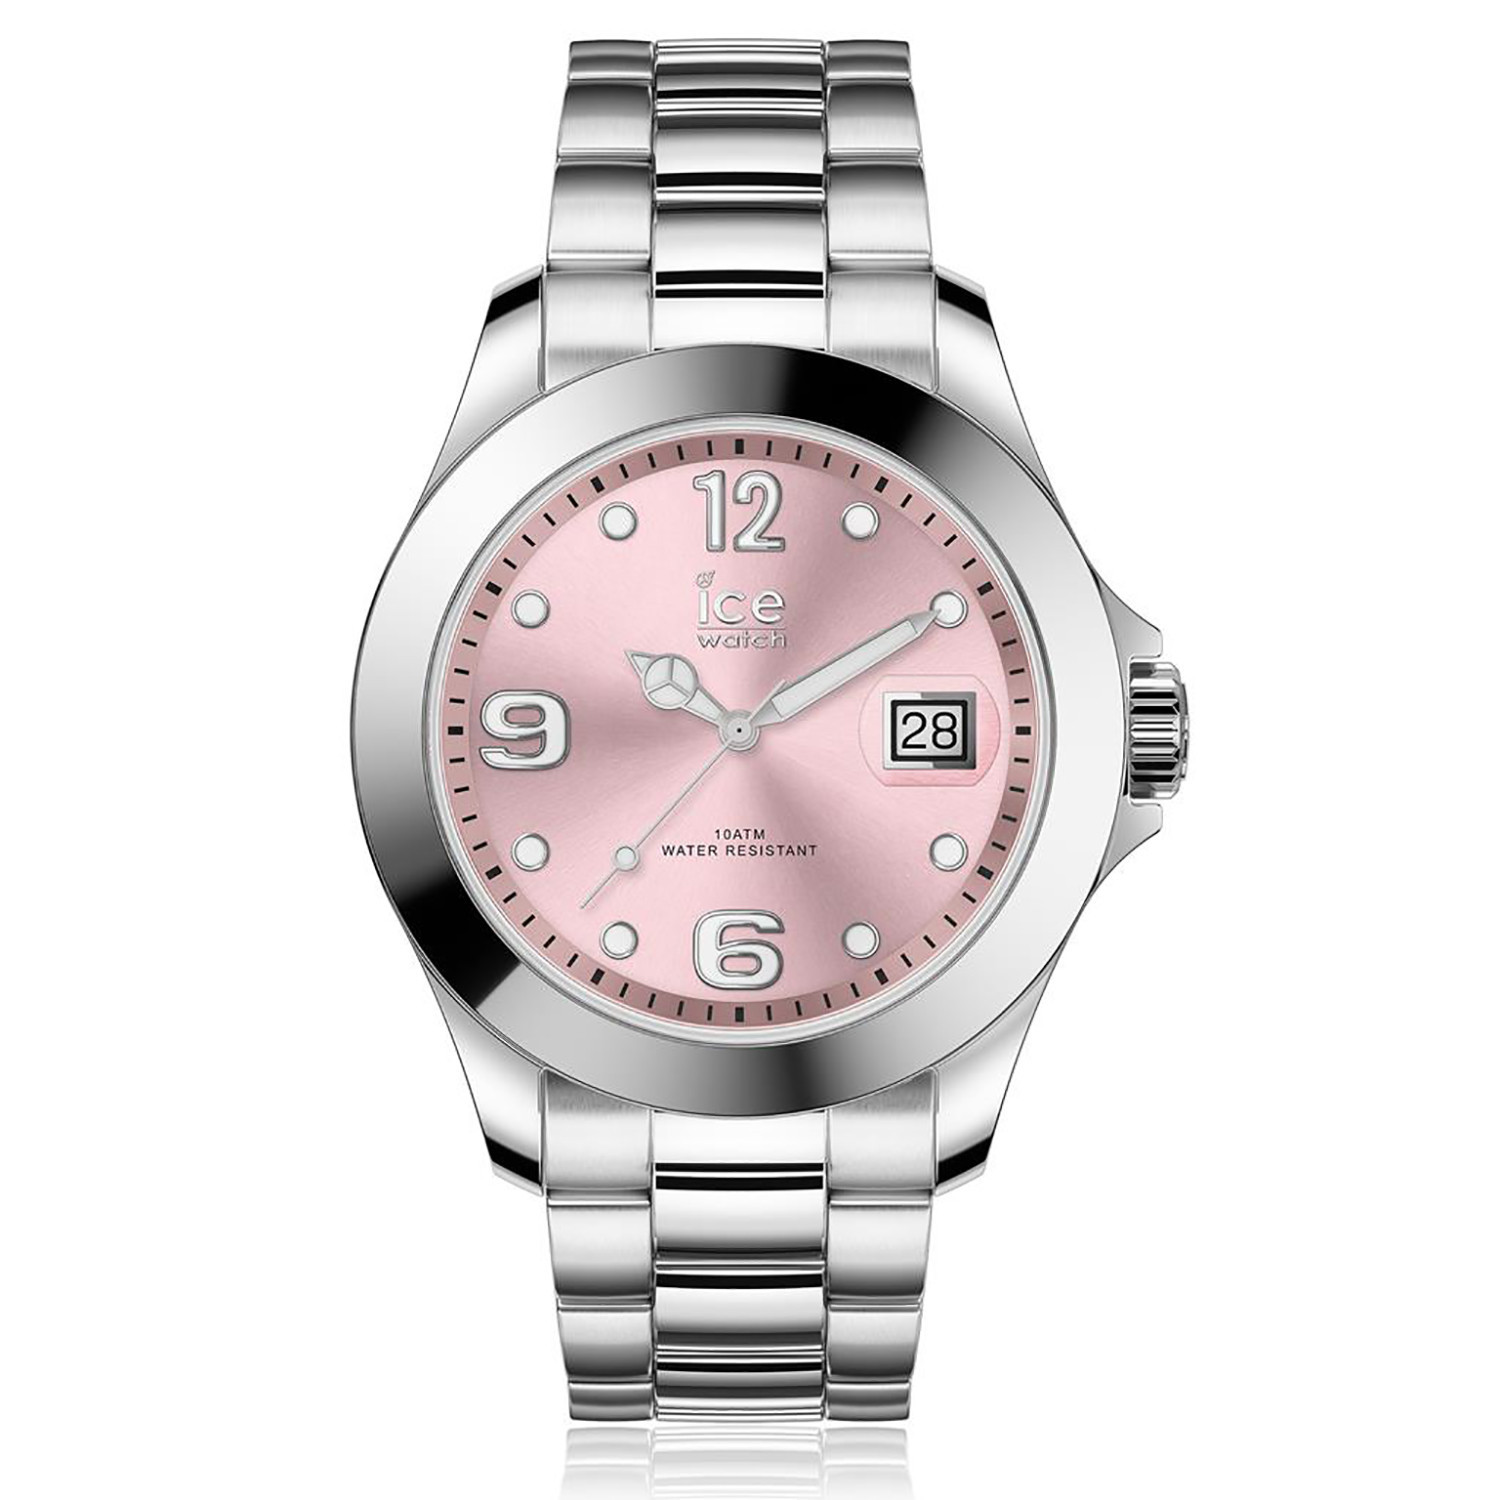 Montre femme Ice Watch steel classic light pink SR
small